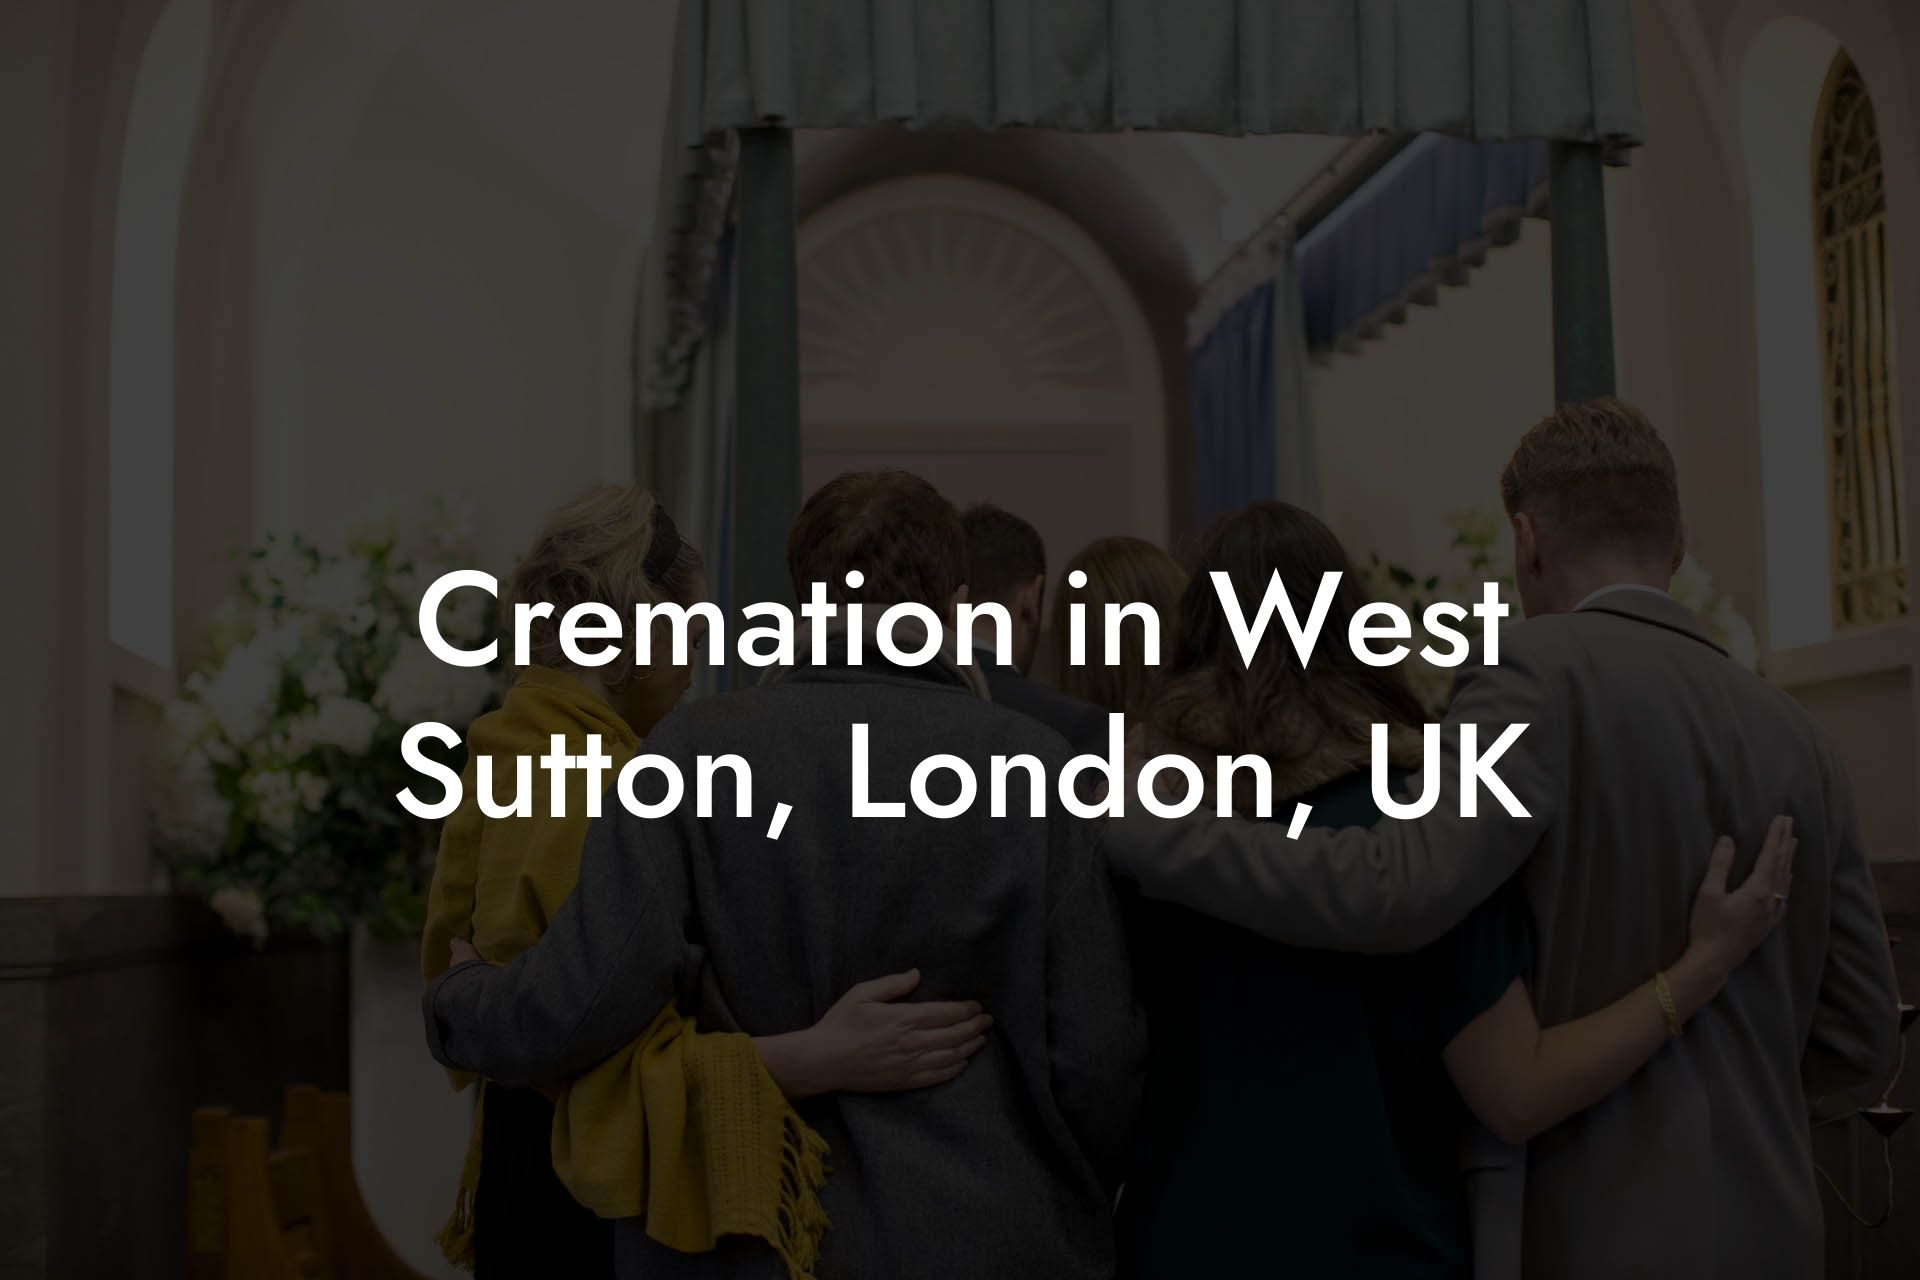 Cremation in West Sutton, London, UK